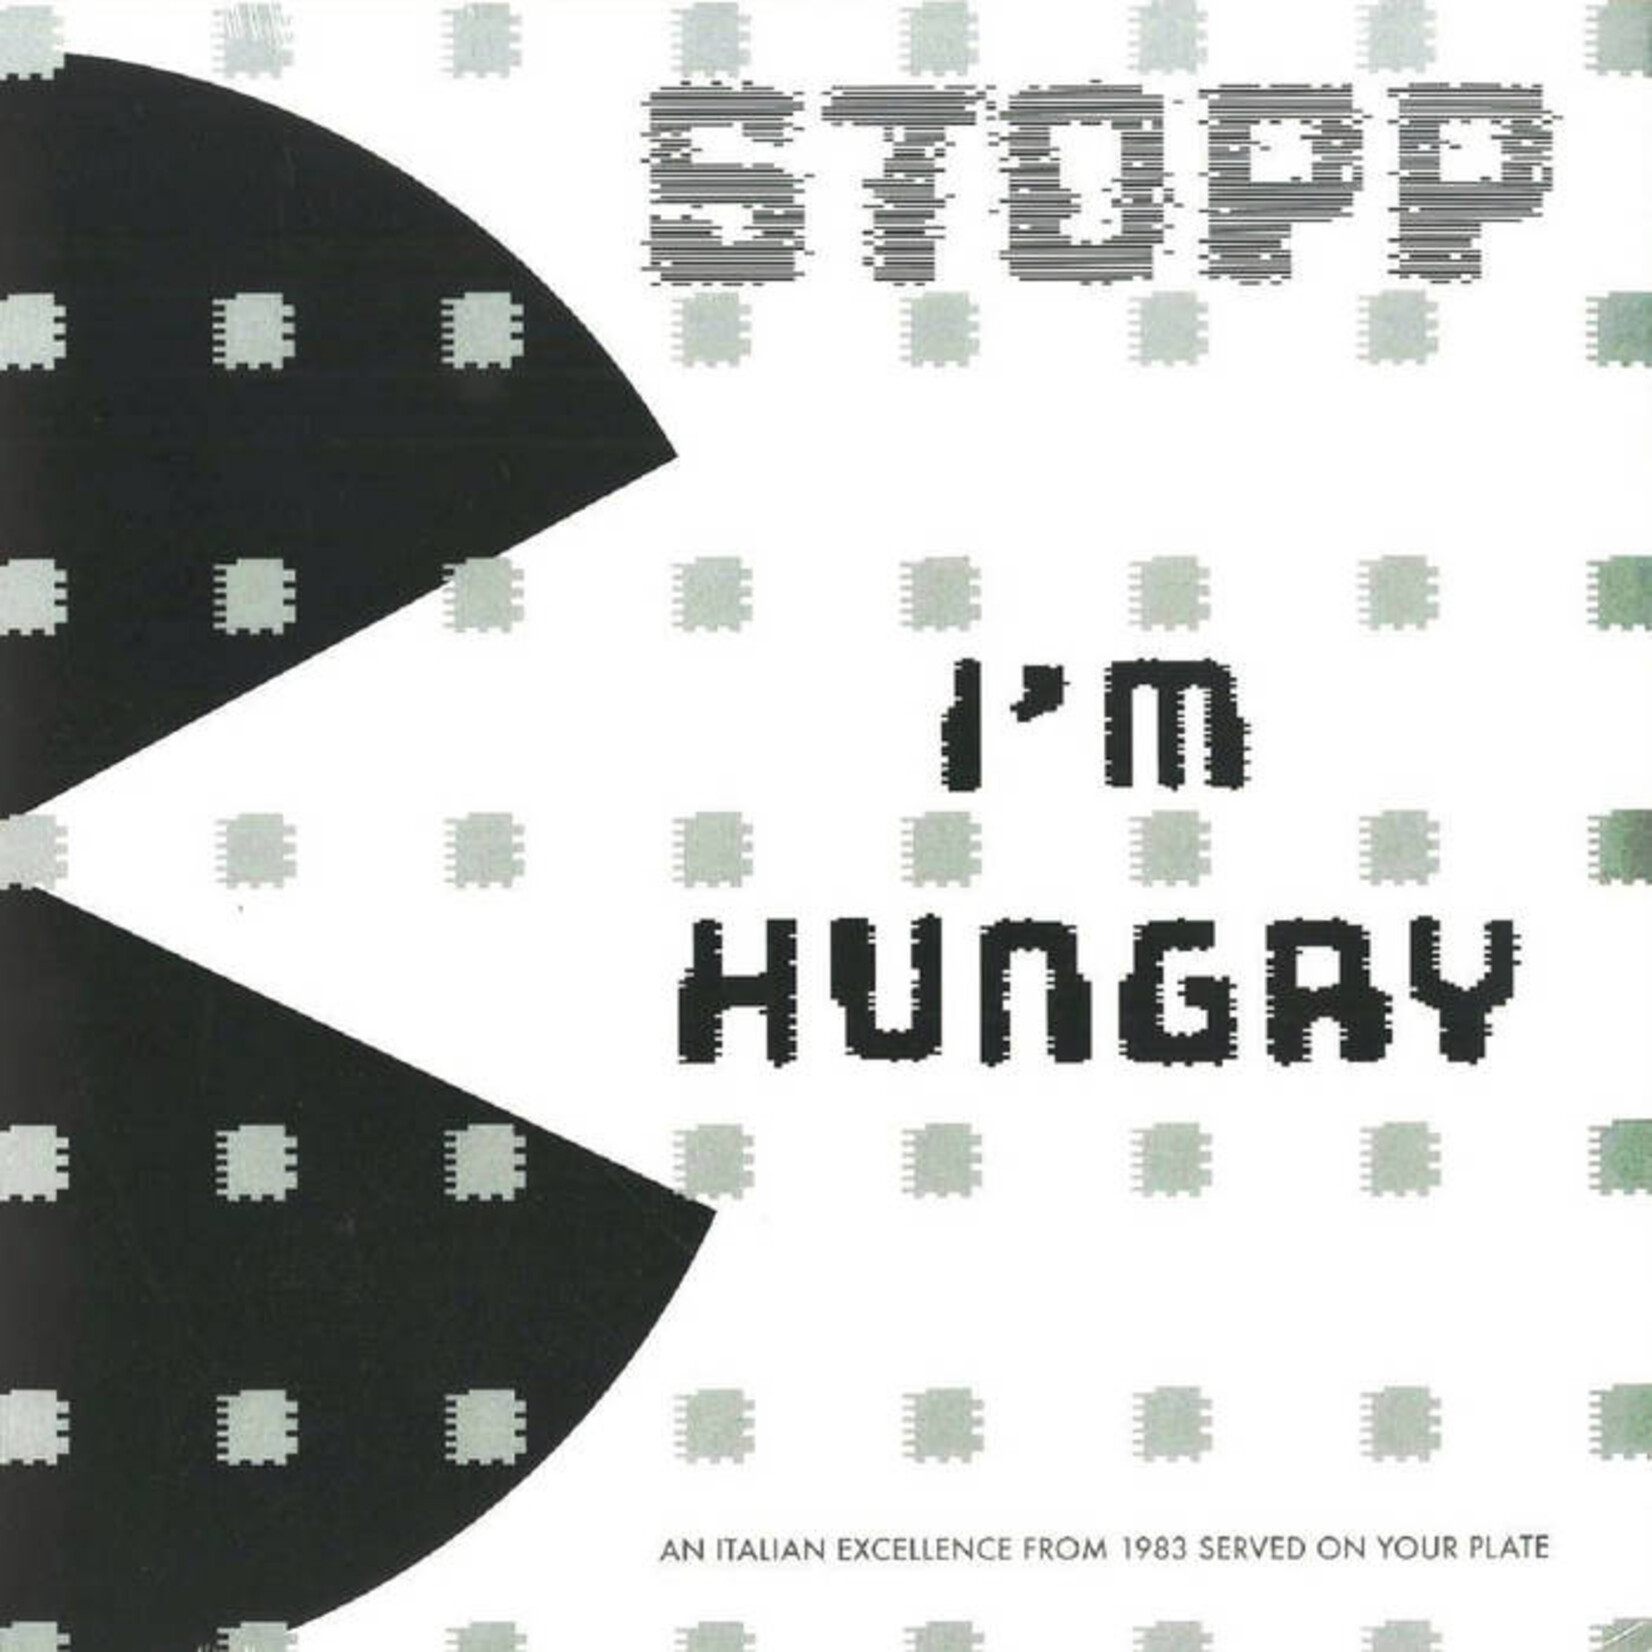 Stopp - I'm Hungry